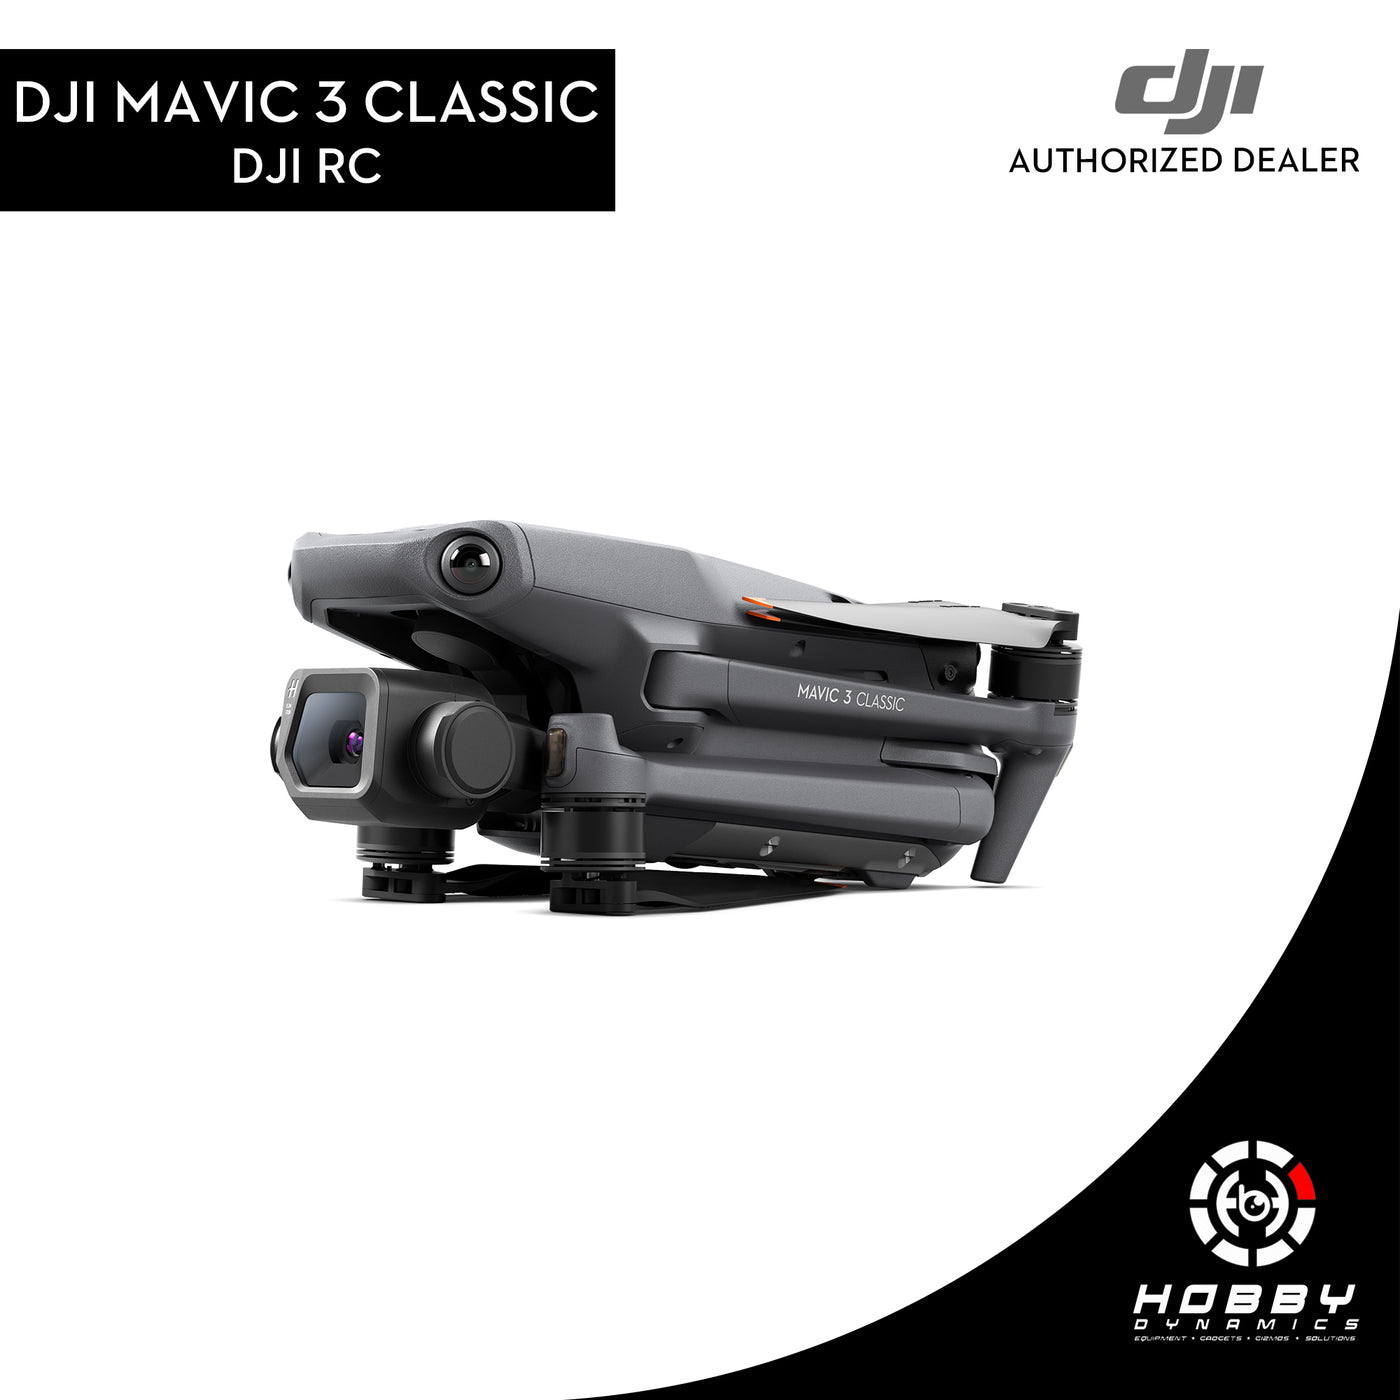 DJI Mavic 3 Classic (DJI RC) with with FREE Sandisk Extreme 64GB SD Card